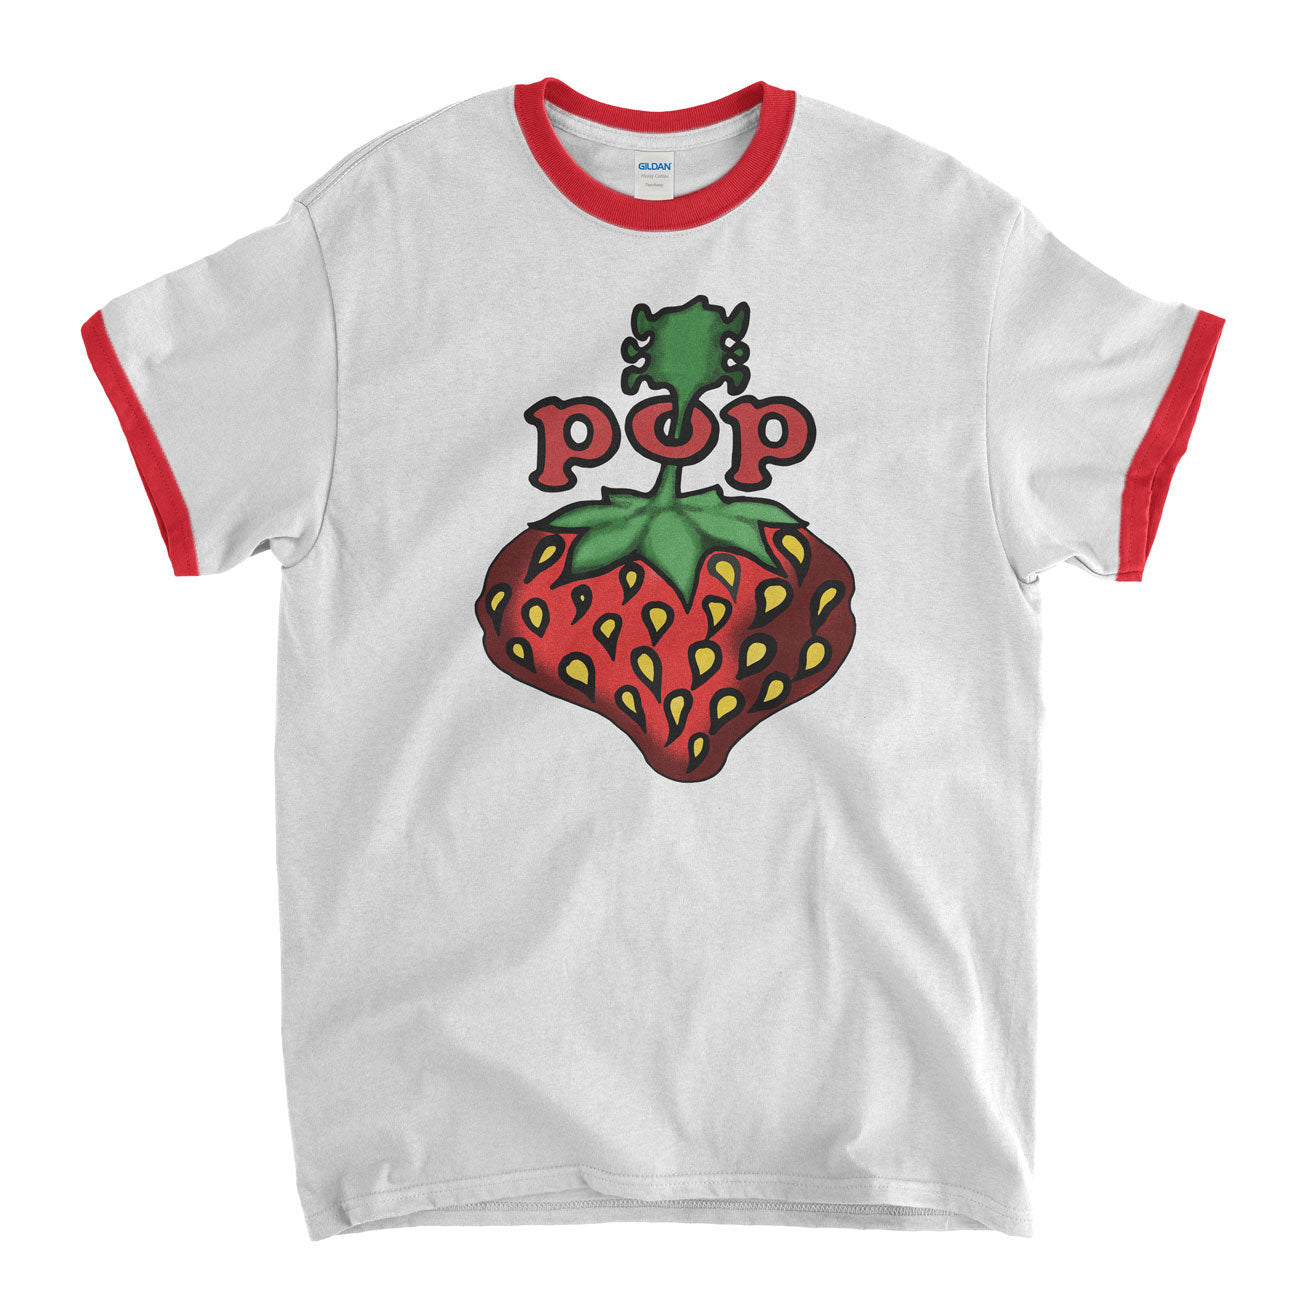 Strawberry Fields Pop Festival T Shirt - An Old Skool Hooligans 70's Classic